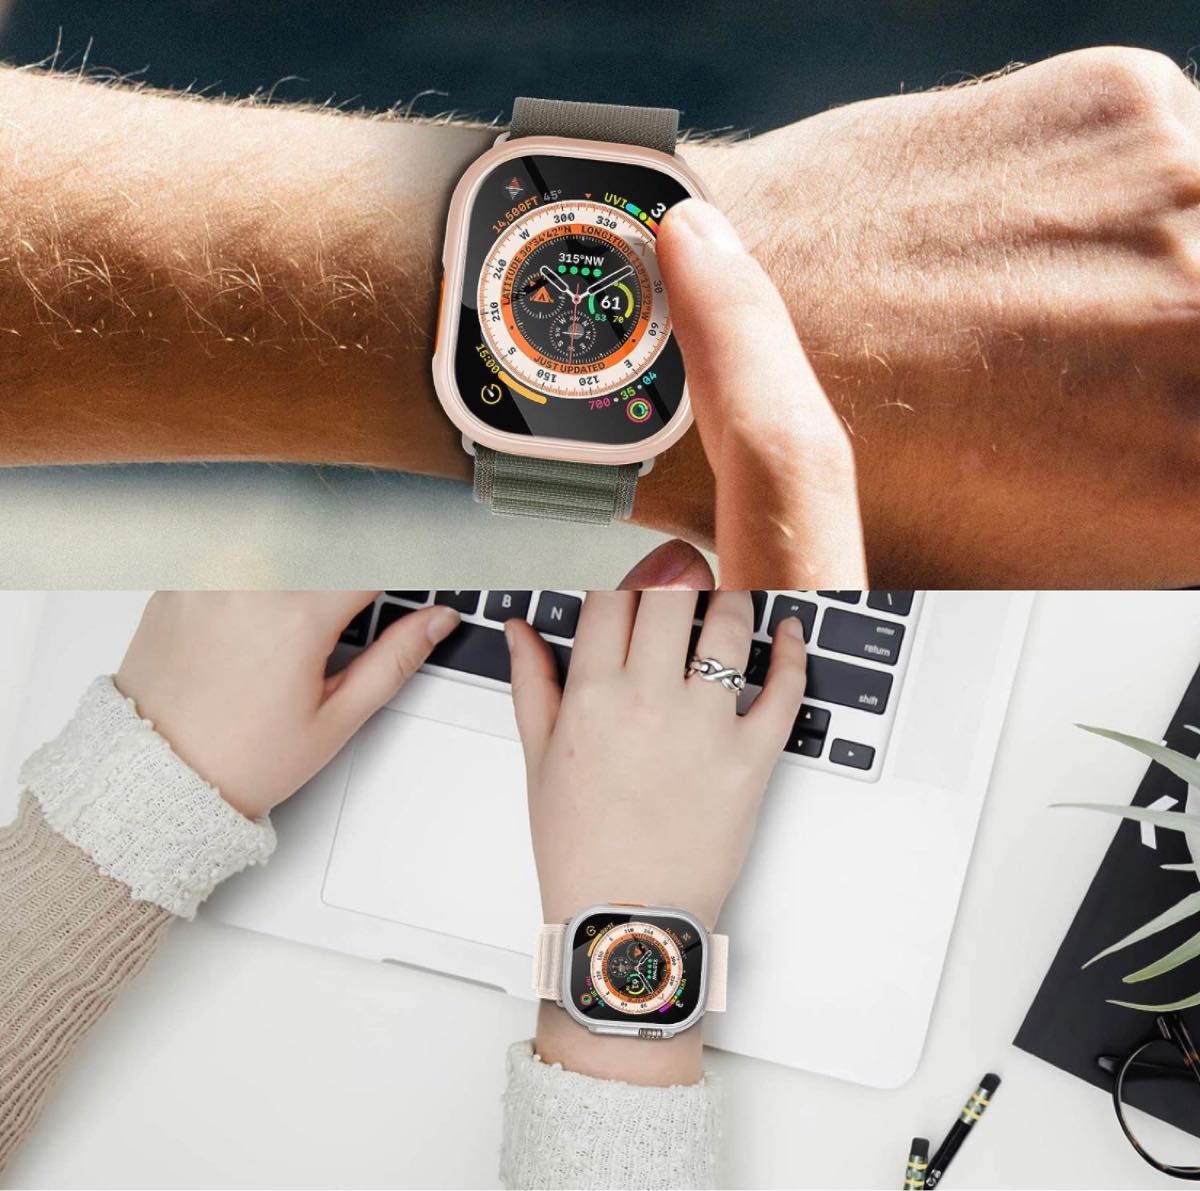 Apple Watch Ultra用保護ケース カバー*2 + 強化ガラスフィルム*2 傷防止 高透過率 気泡ゼロ ワイヤレス充電